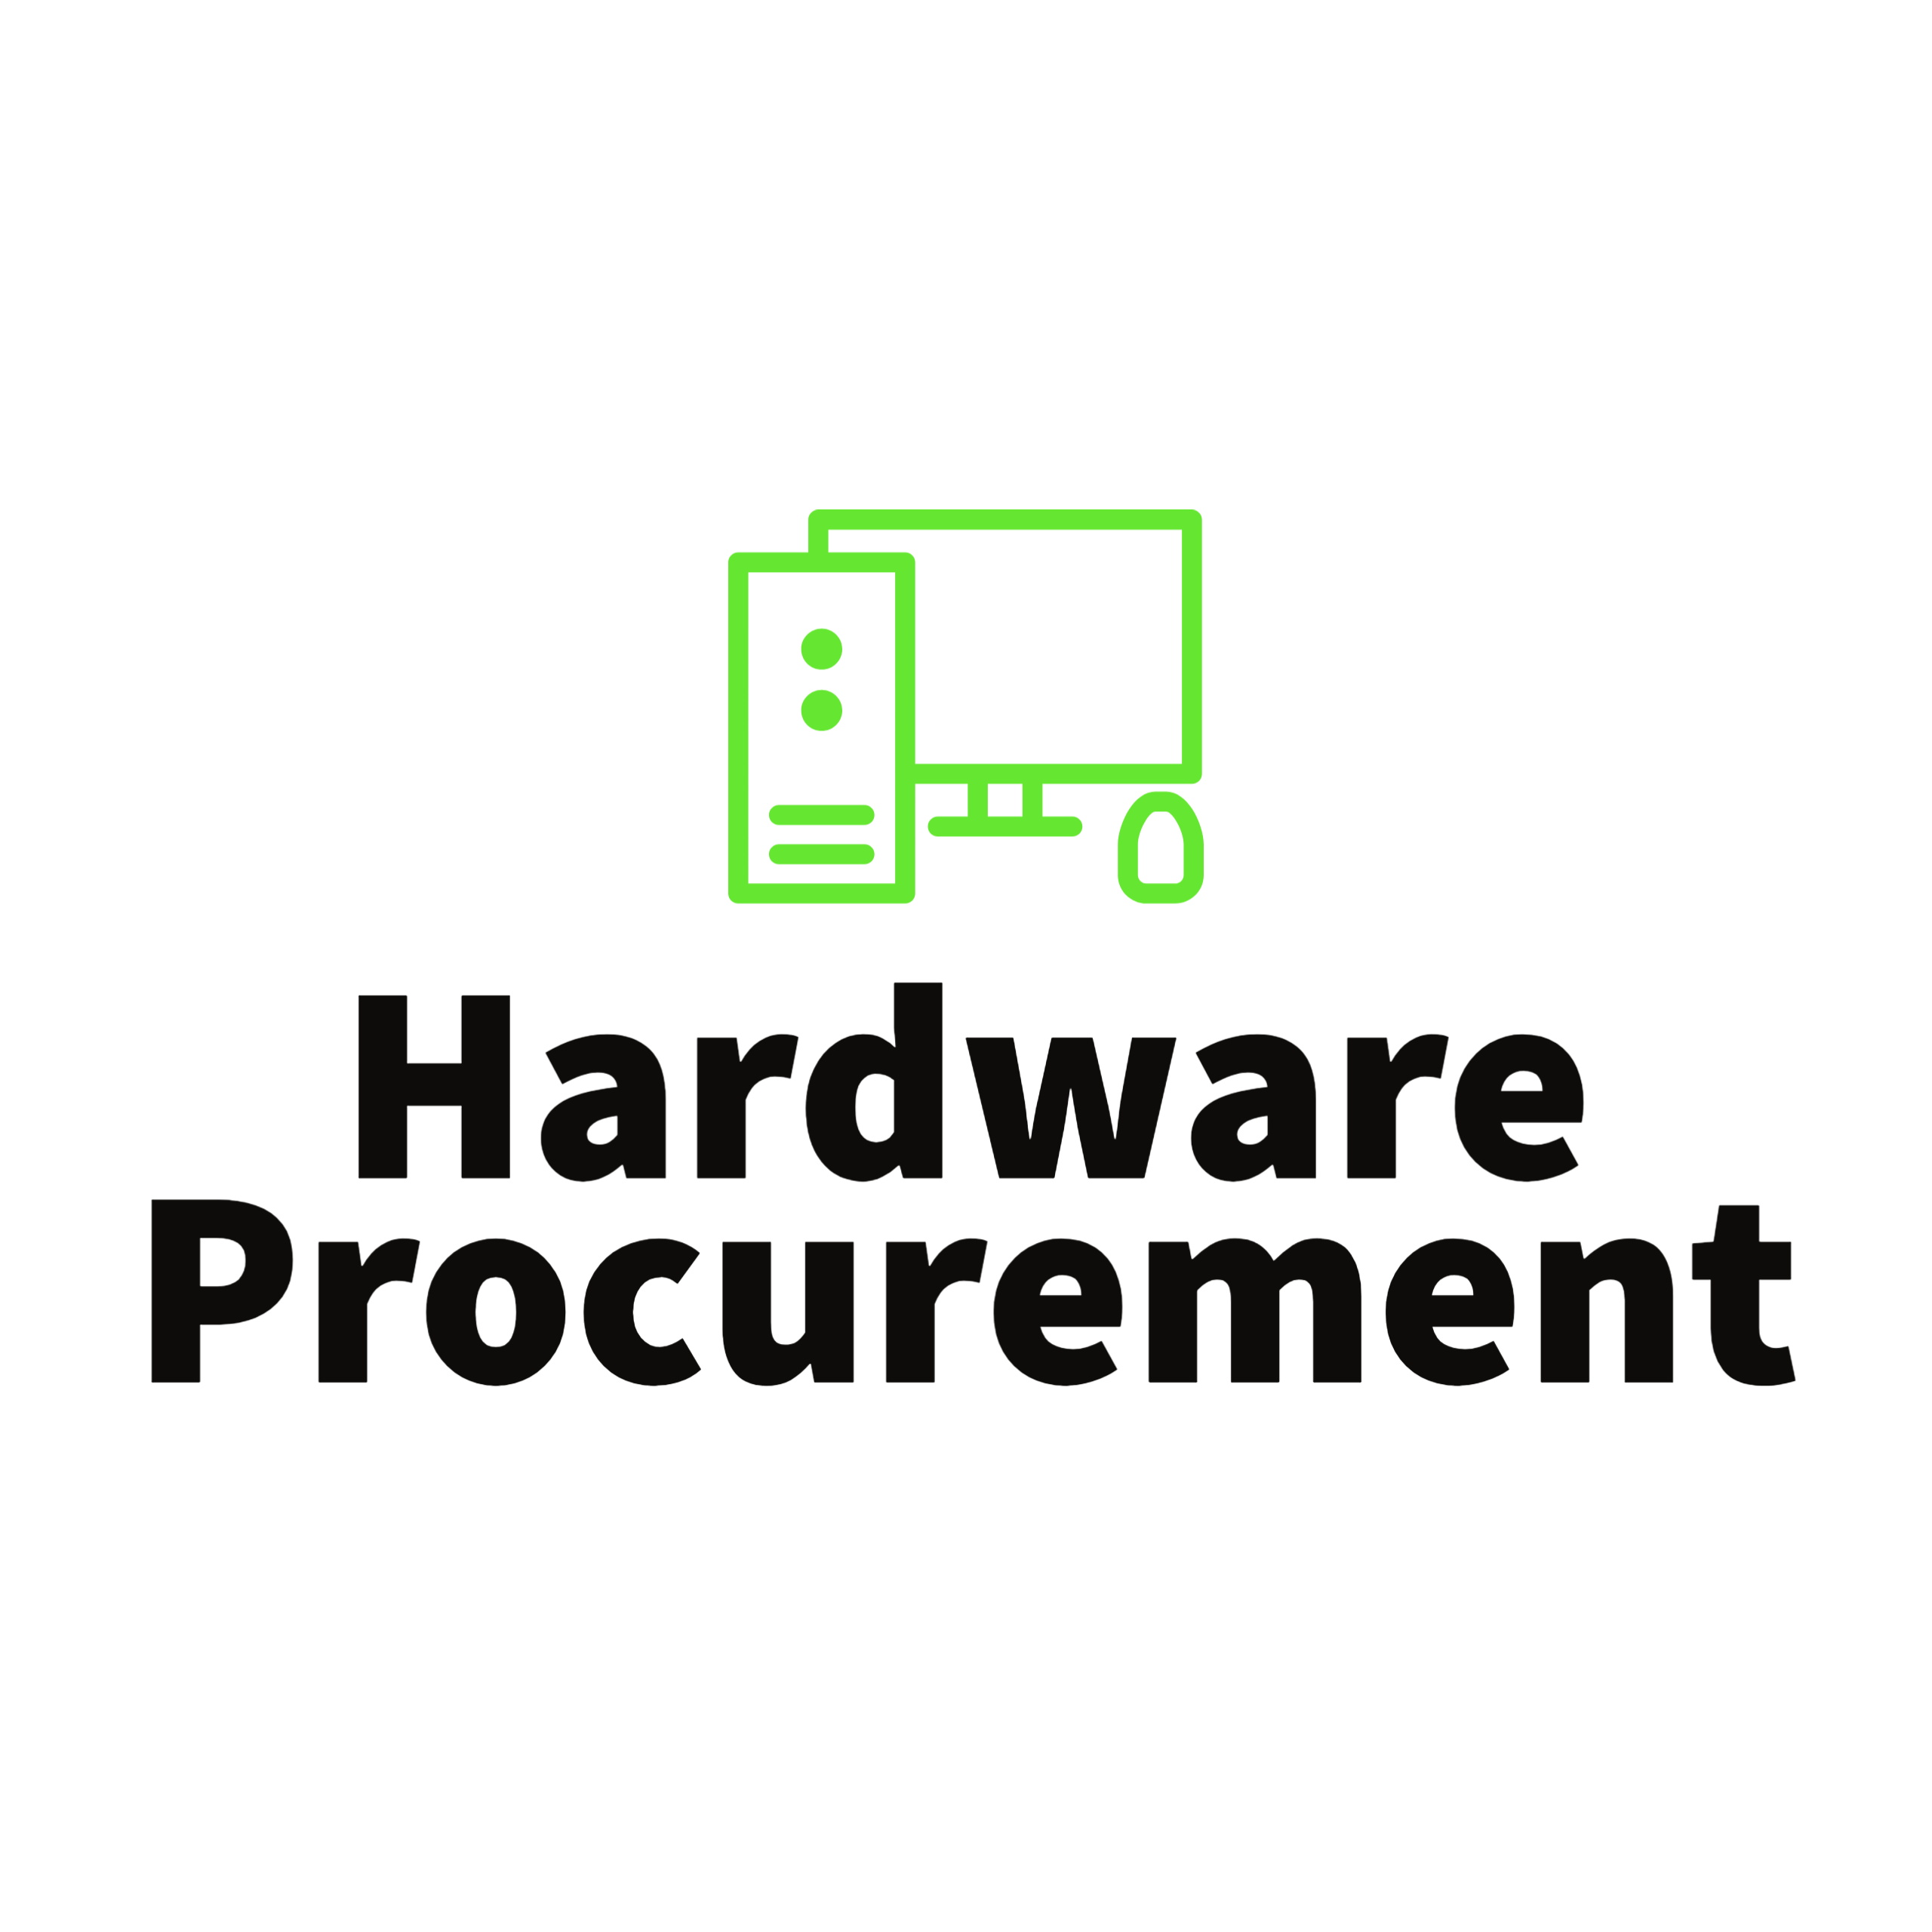 Hardware Procurement